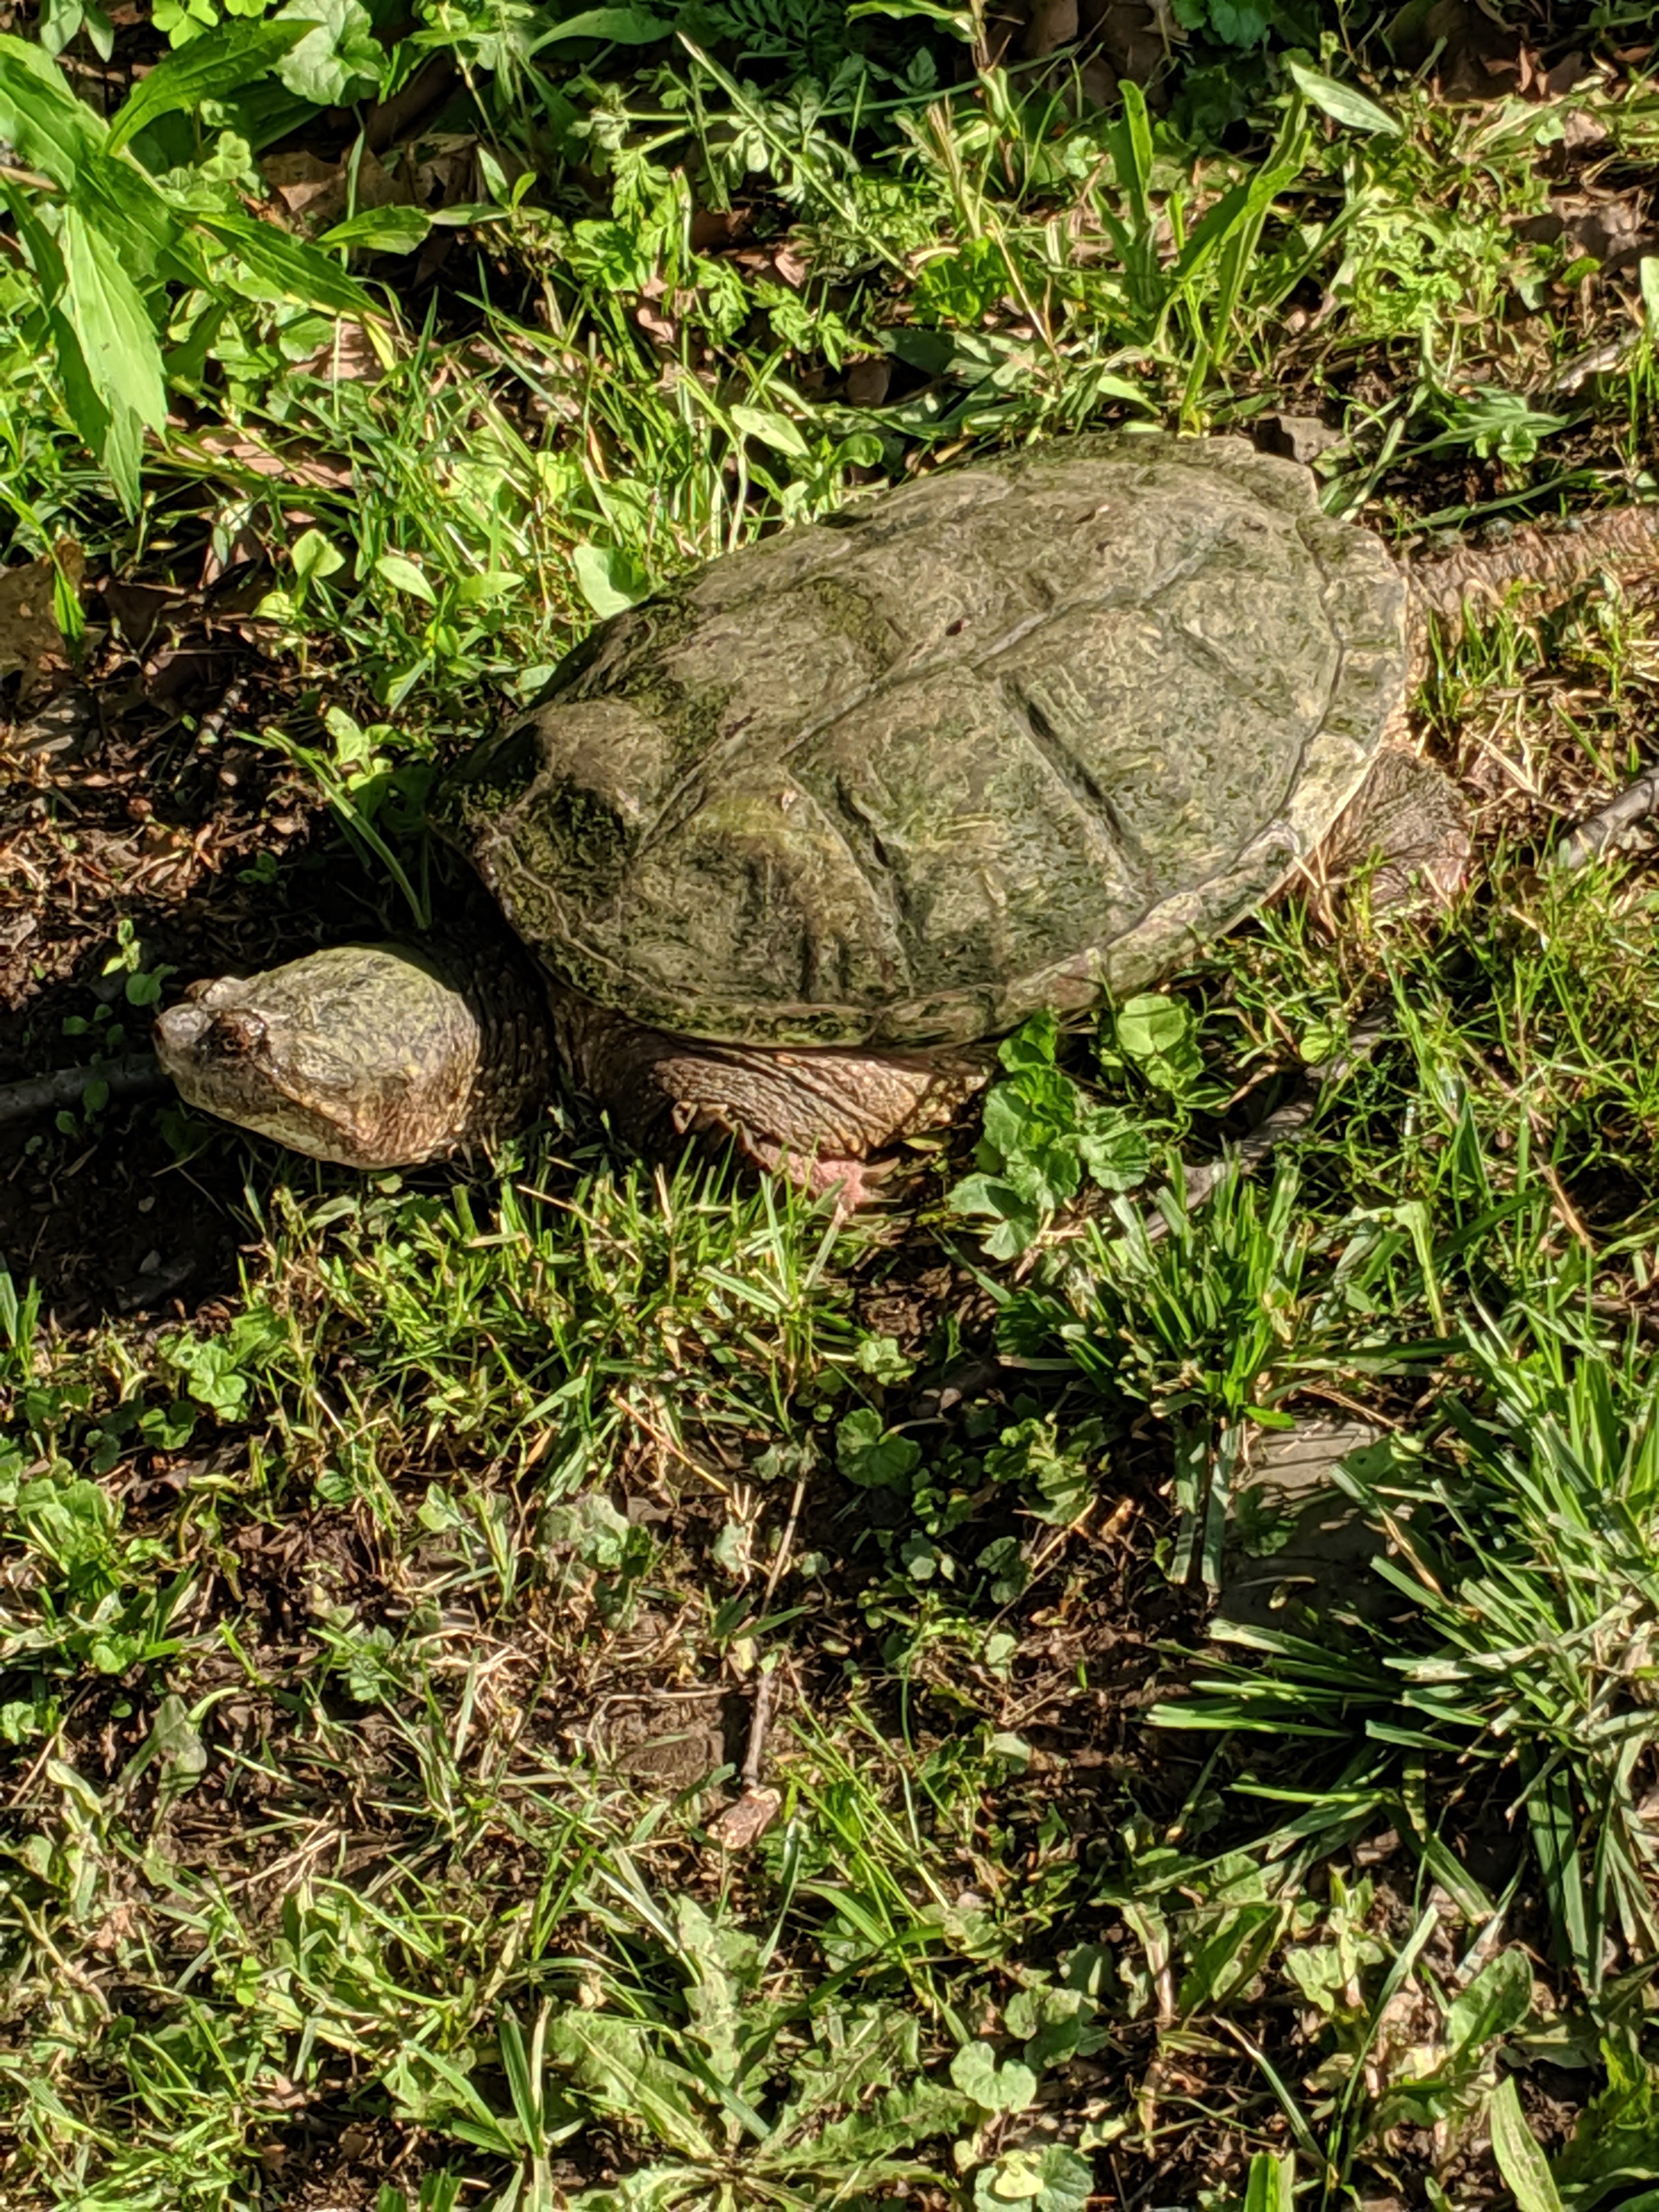 Morning turtle visits